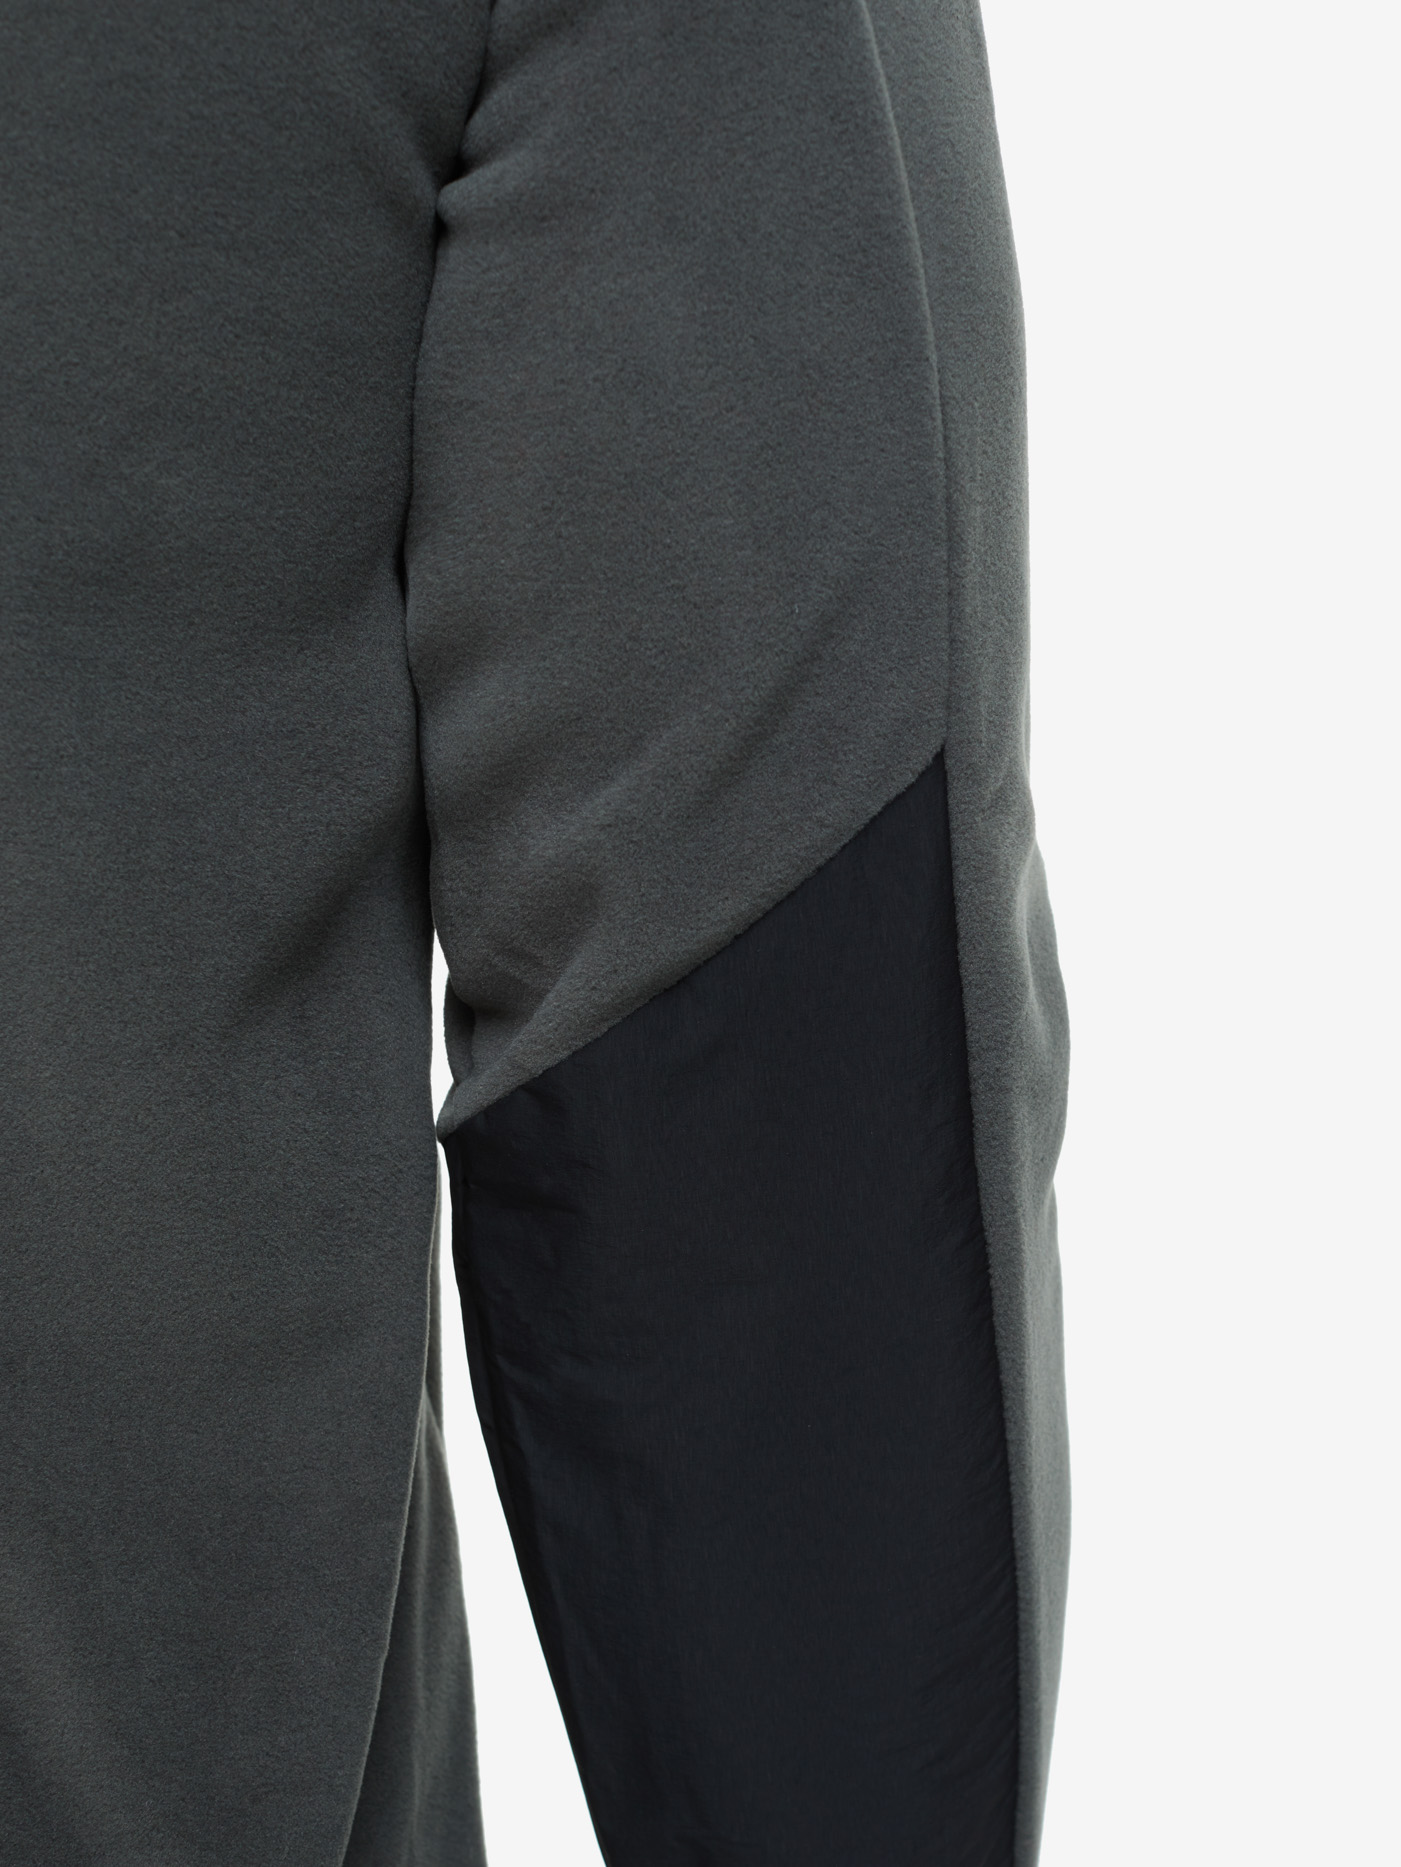 Куртка BASK, размер 50, цвет серый 19112-9609-050 MICRO MJ - фото 7